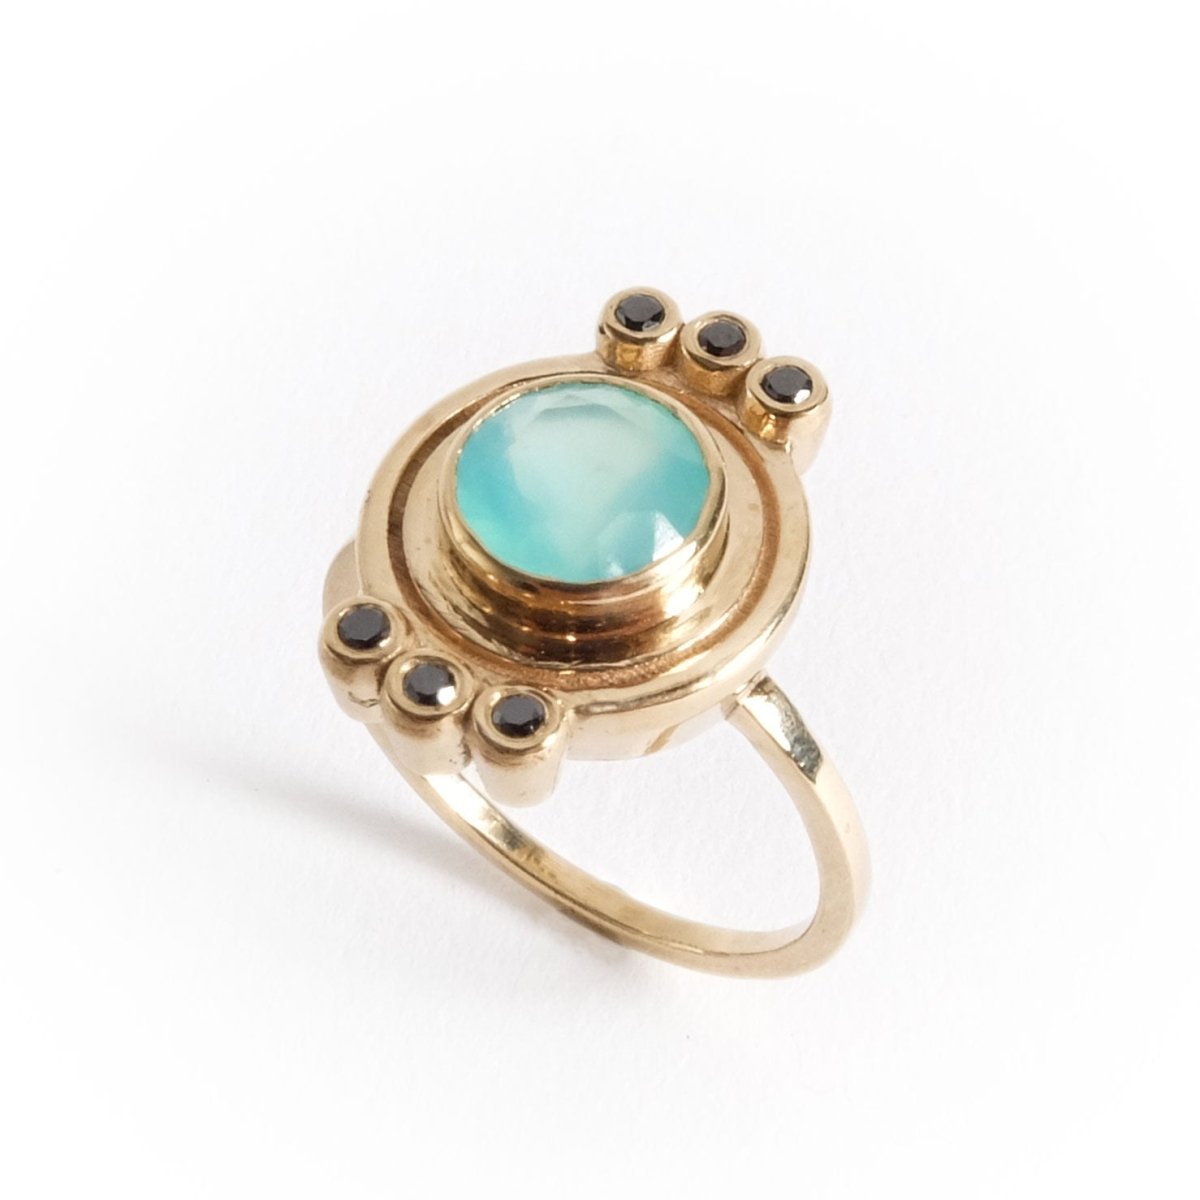 10k gold ring with round bezel set Peruvian Opal and six black diamonds by Portland designer betsy & iya